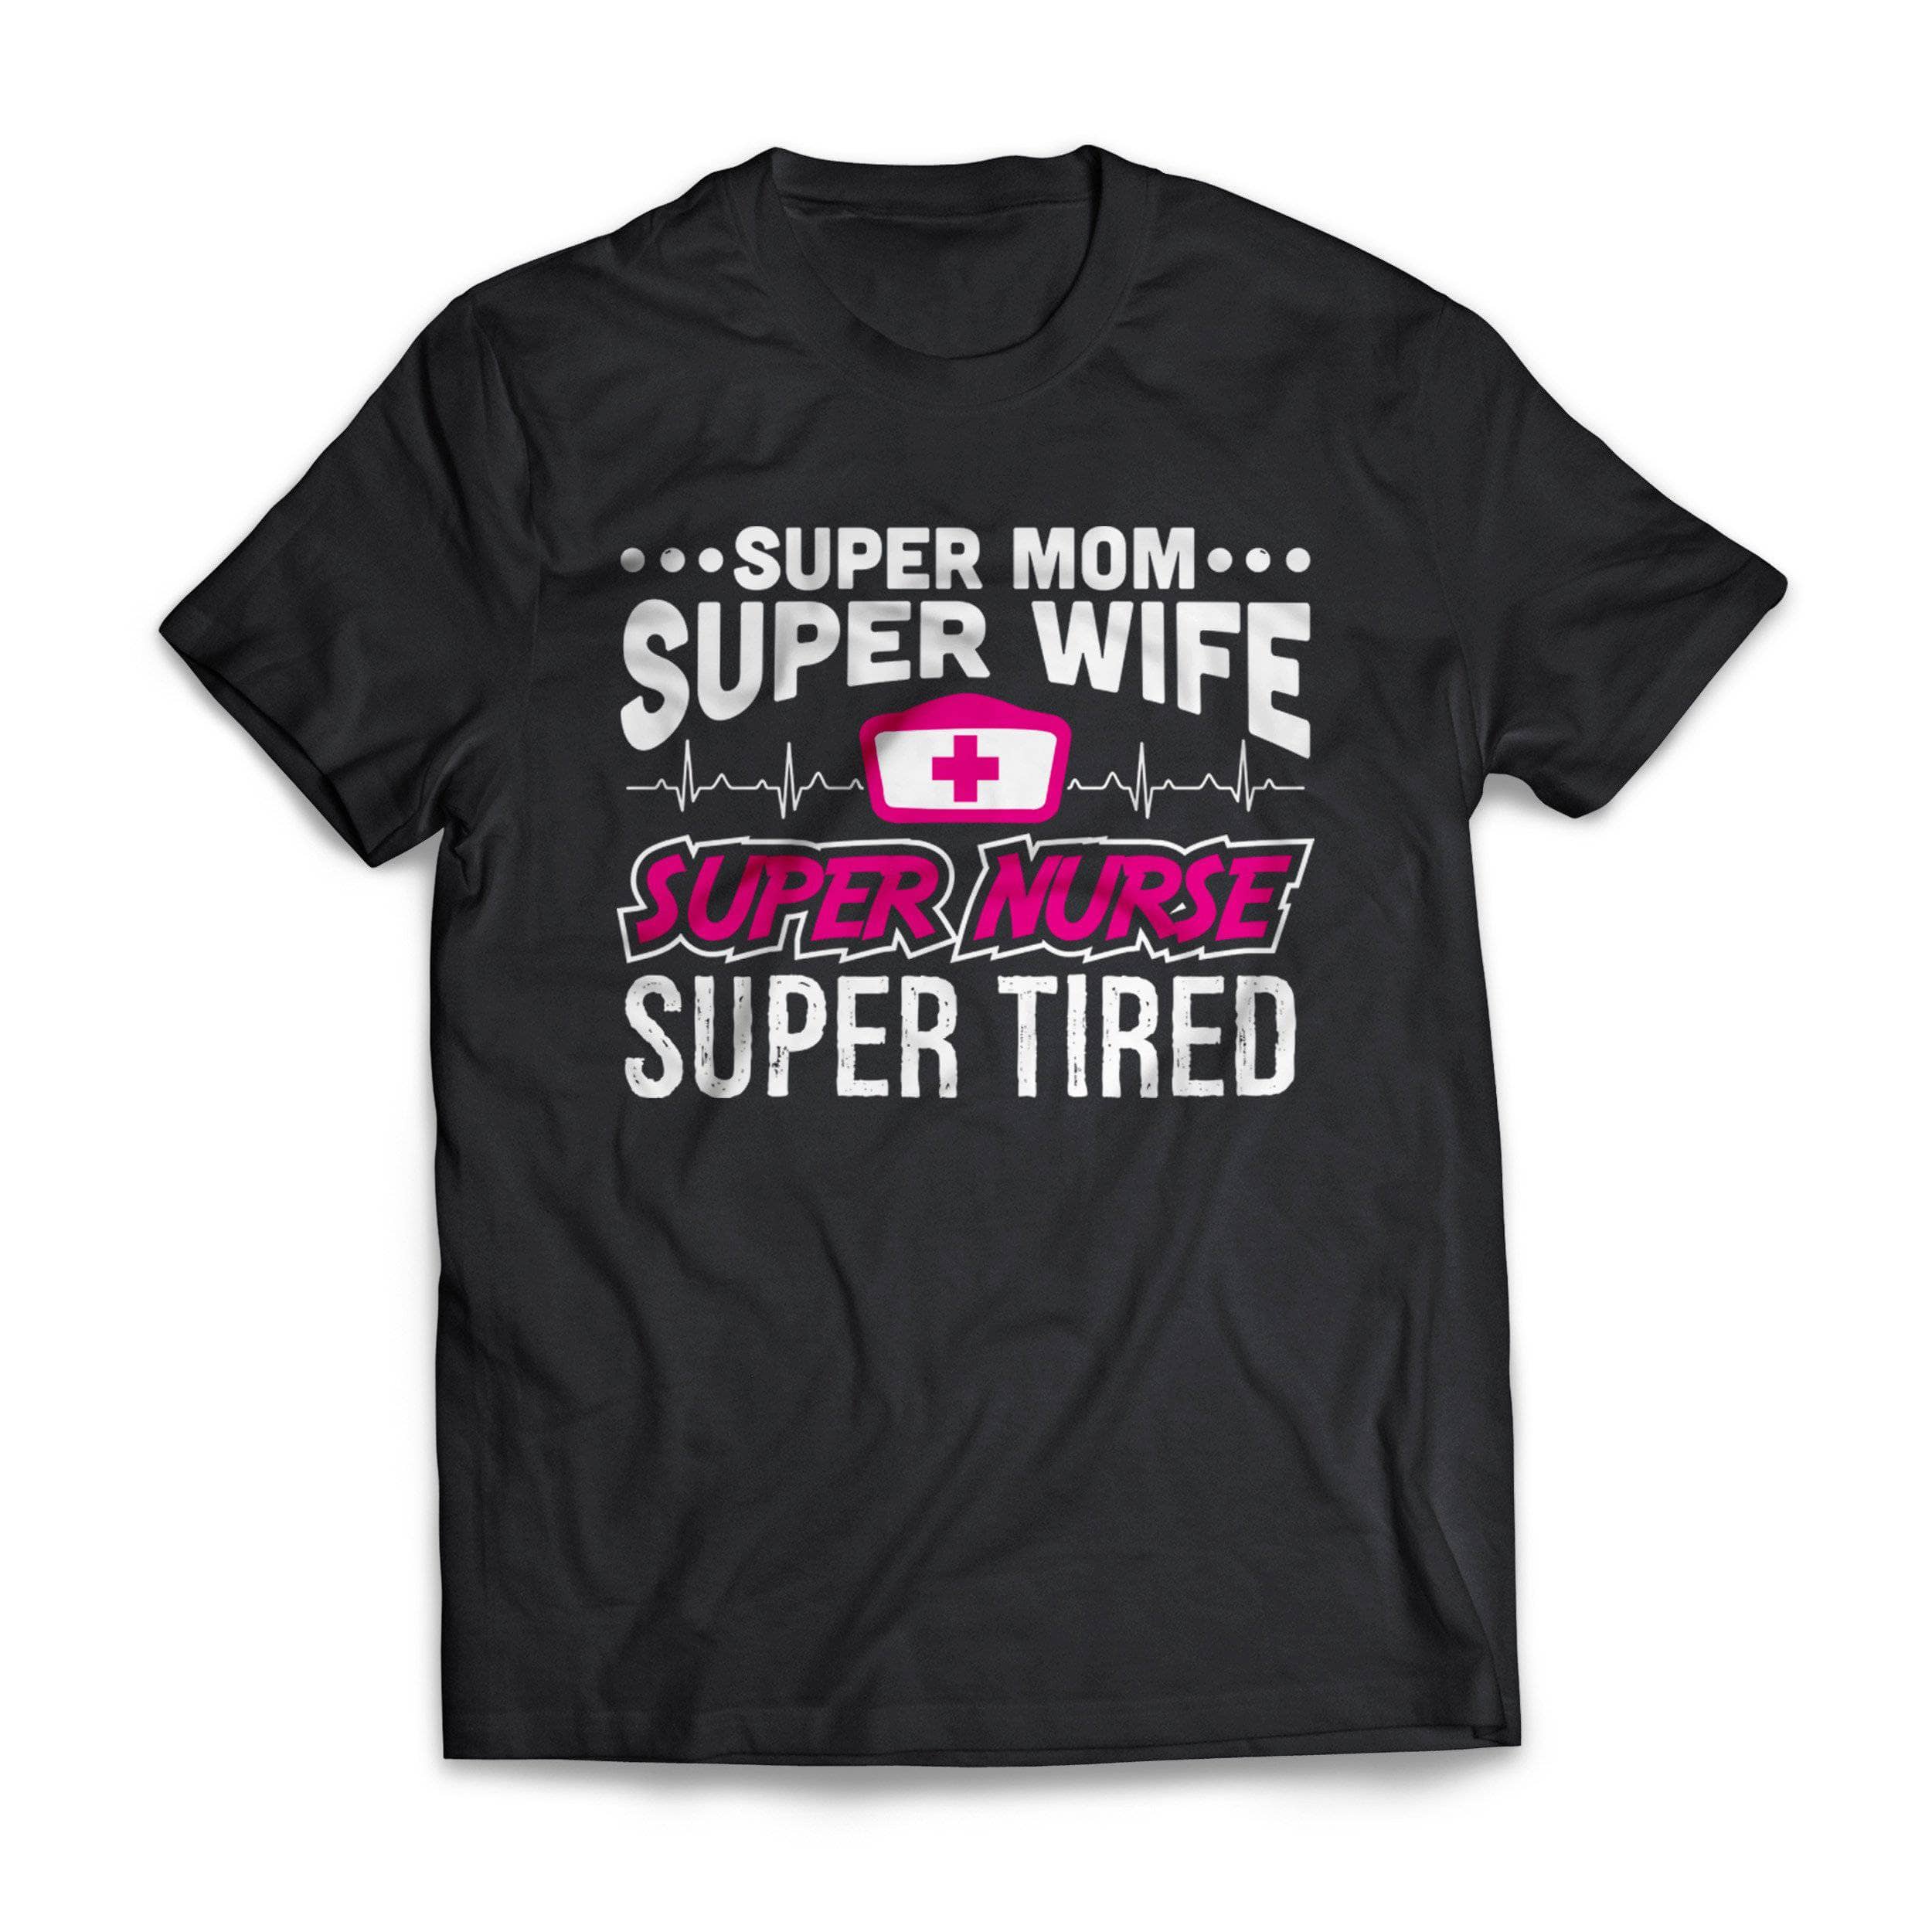 Super Nurse Super Tired Short Sleeve Tee